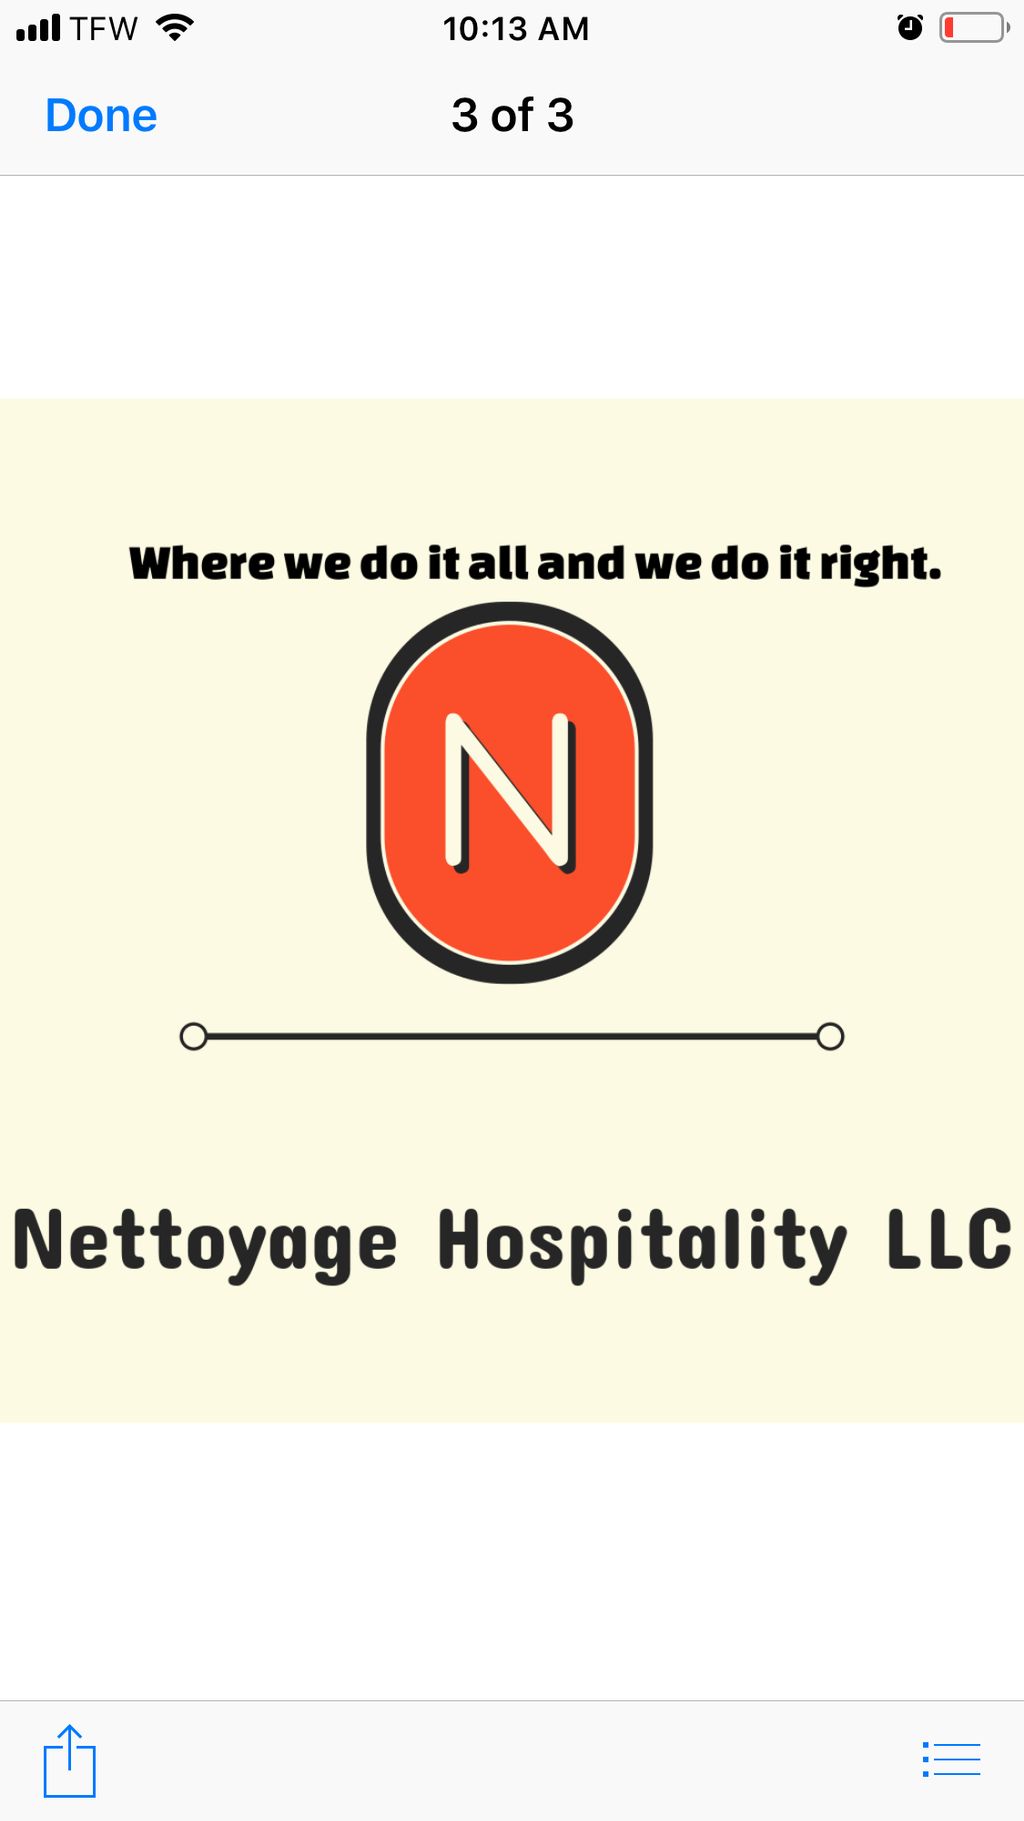 Nettoyage Hospitality LLC